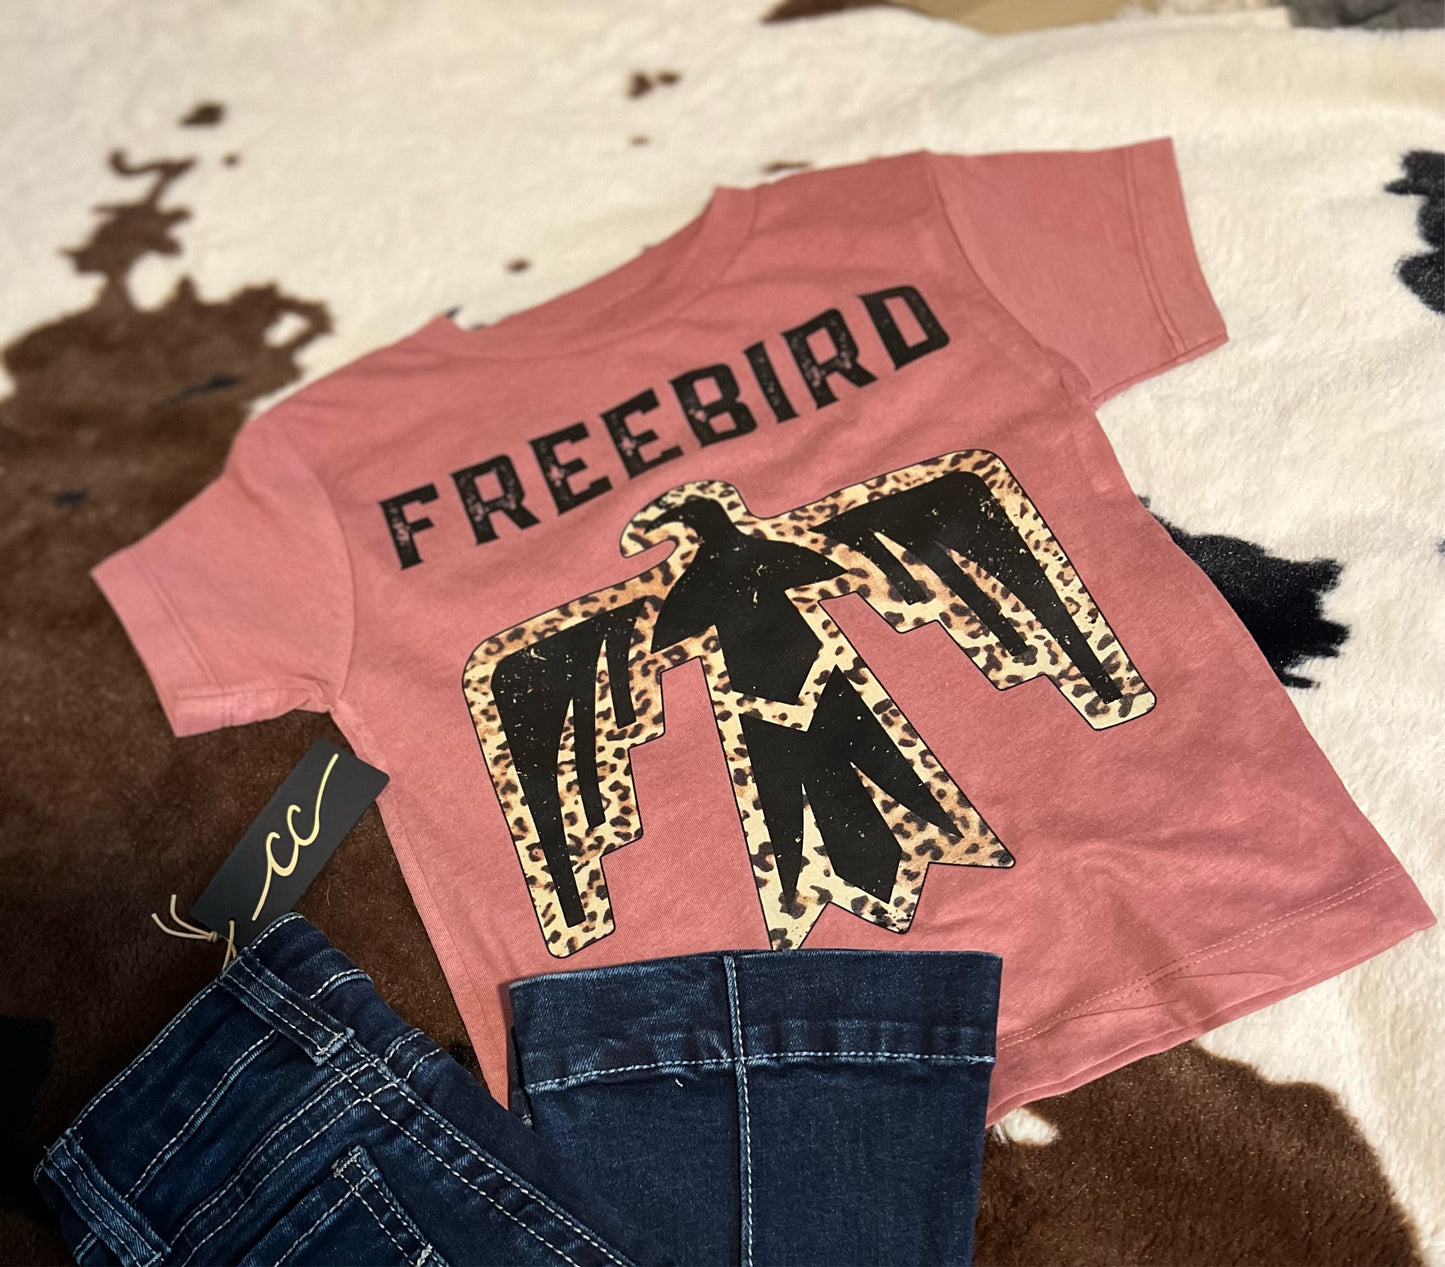 FREEBIRD Youth shirt